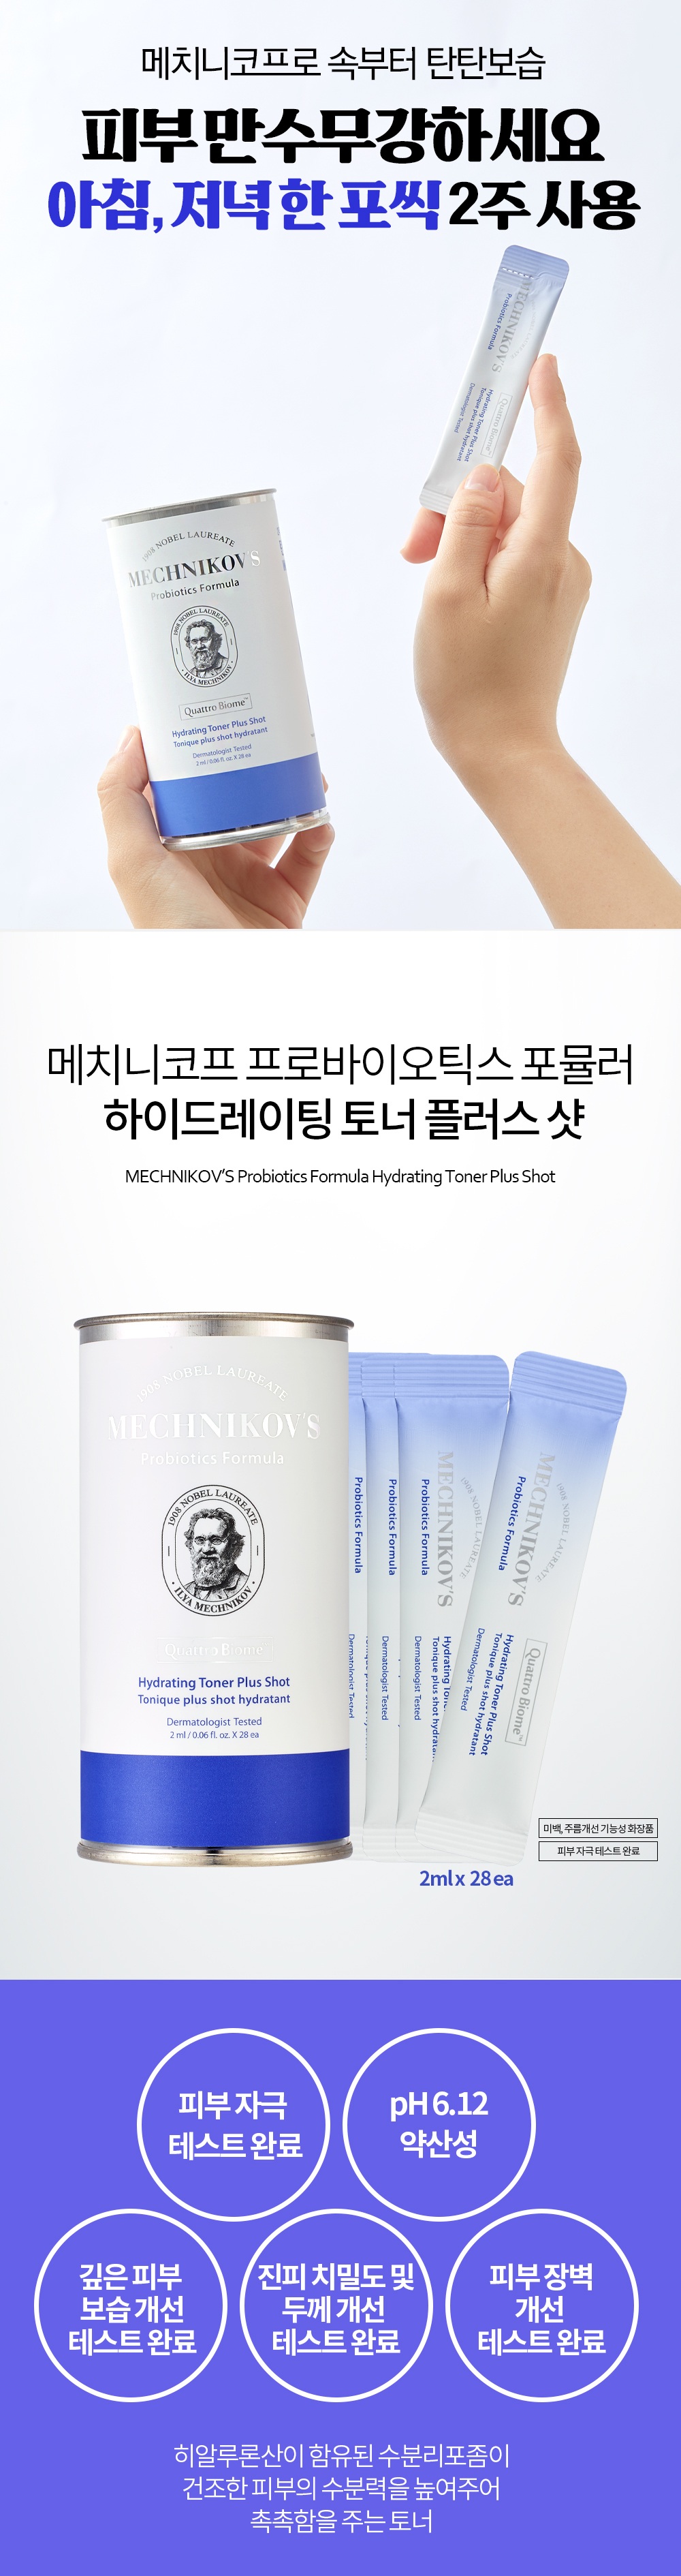 Holika Holika Mechnikov's Probiotics Formula Hydrating Toner Plus Shot korean cosmetic skincare product online shop malaysia China hong kong